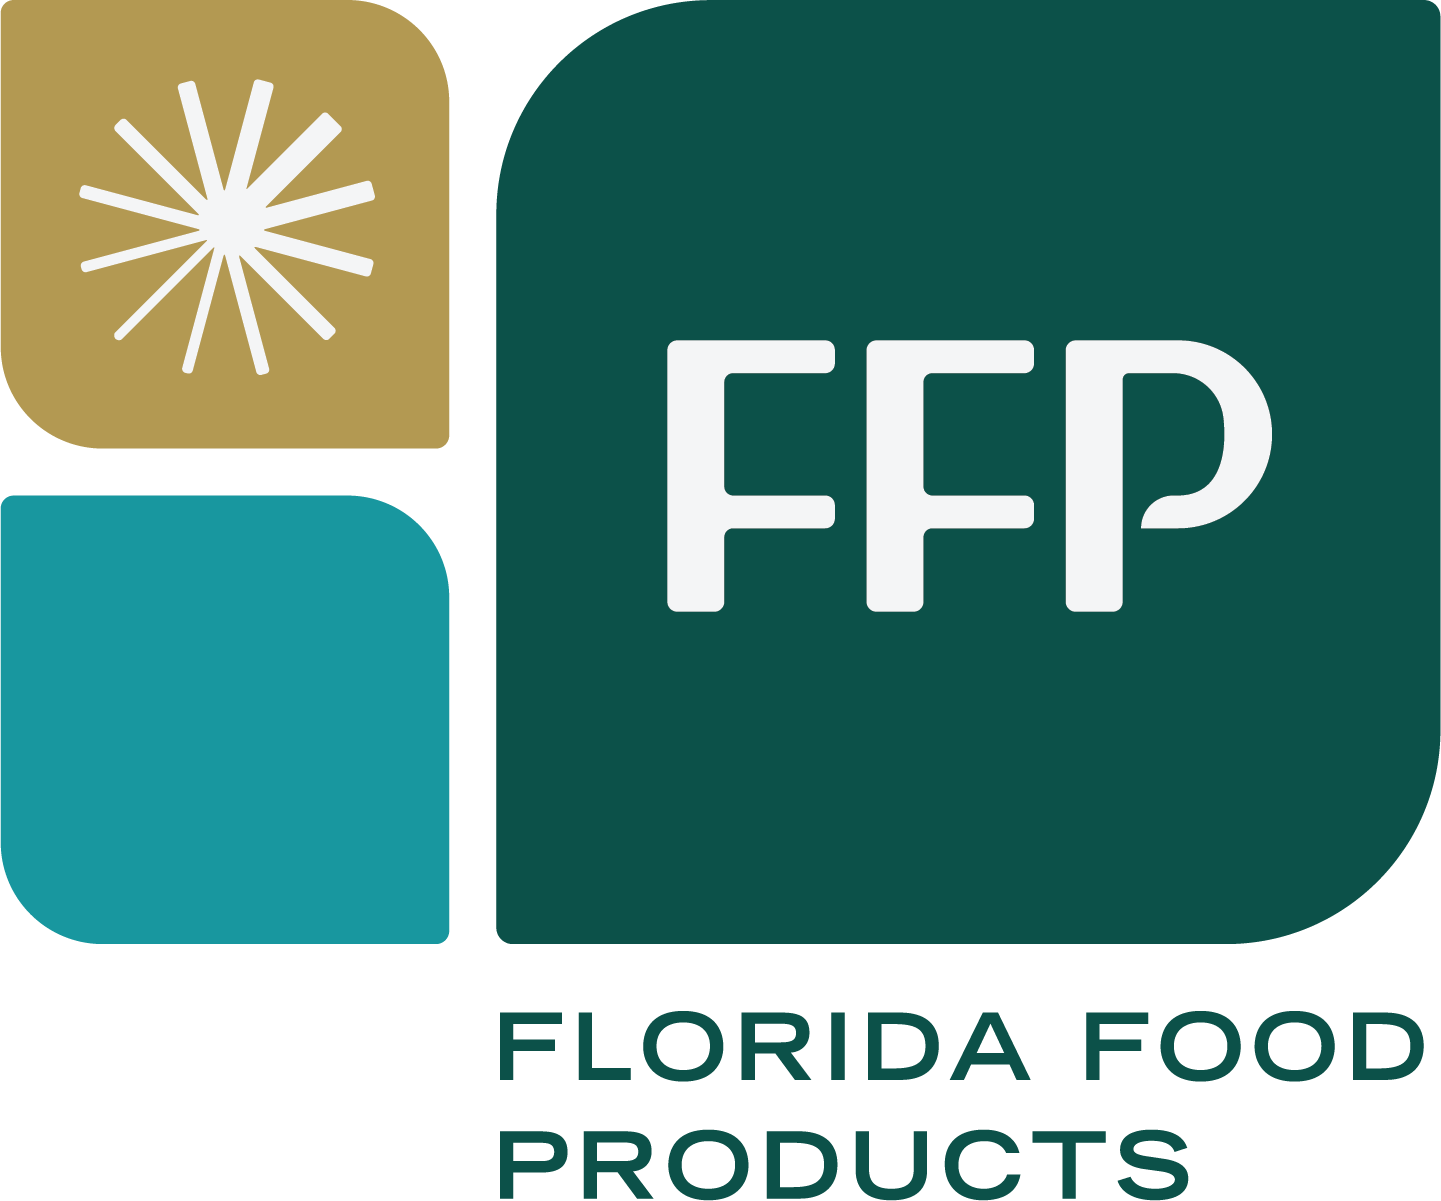 Florida Food Products (Ardian & MidOcean) acquires Javo